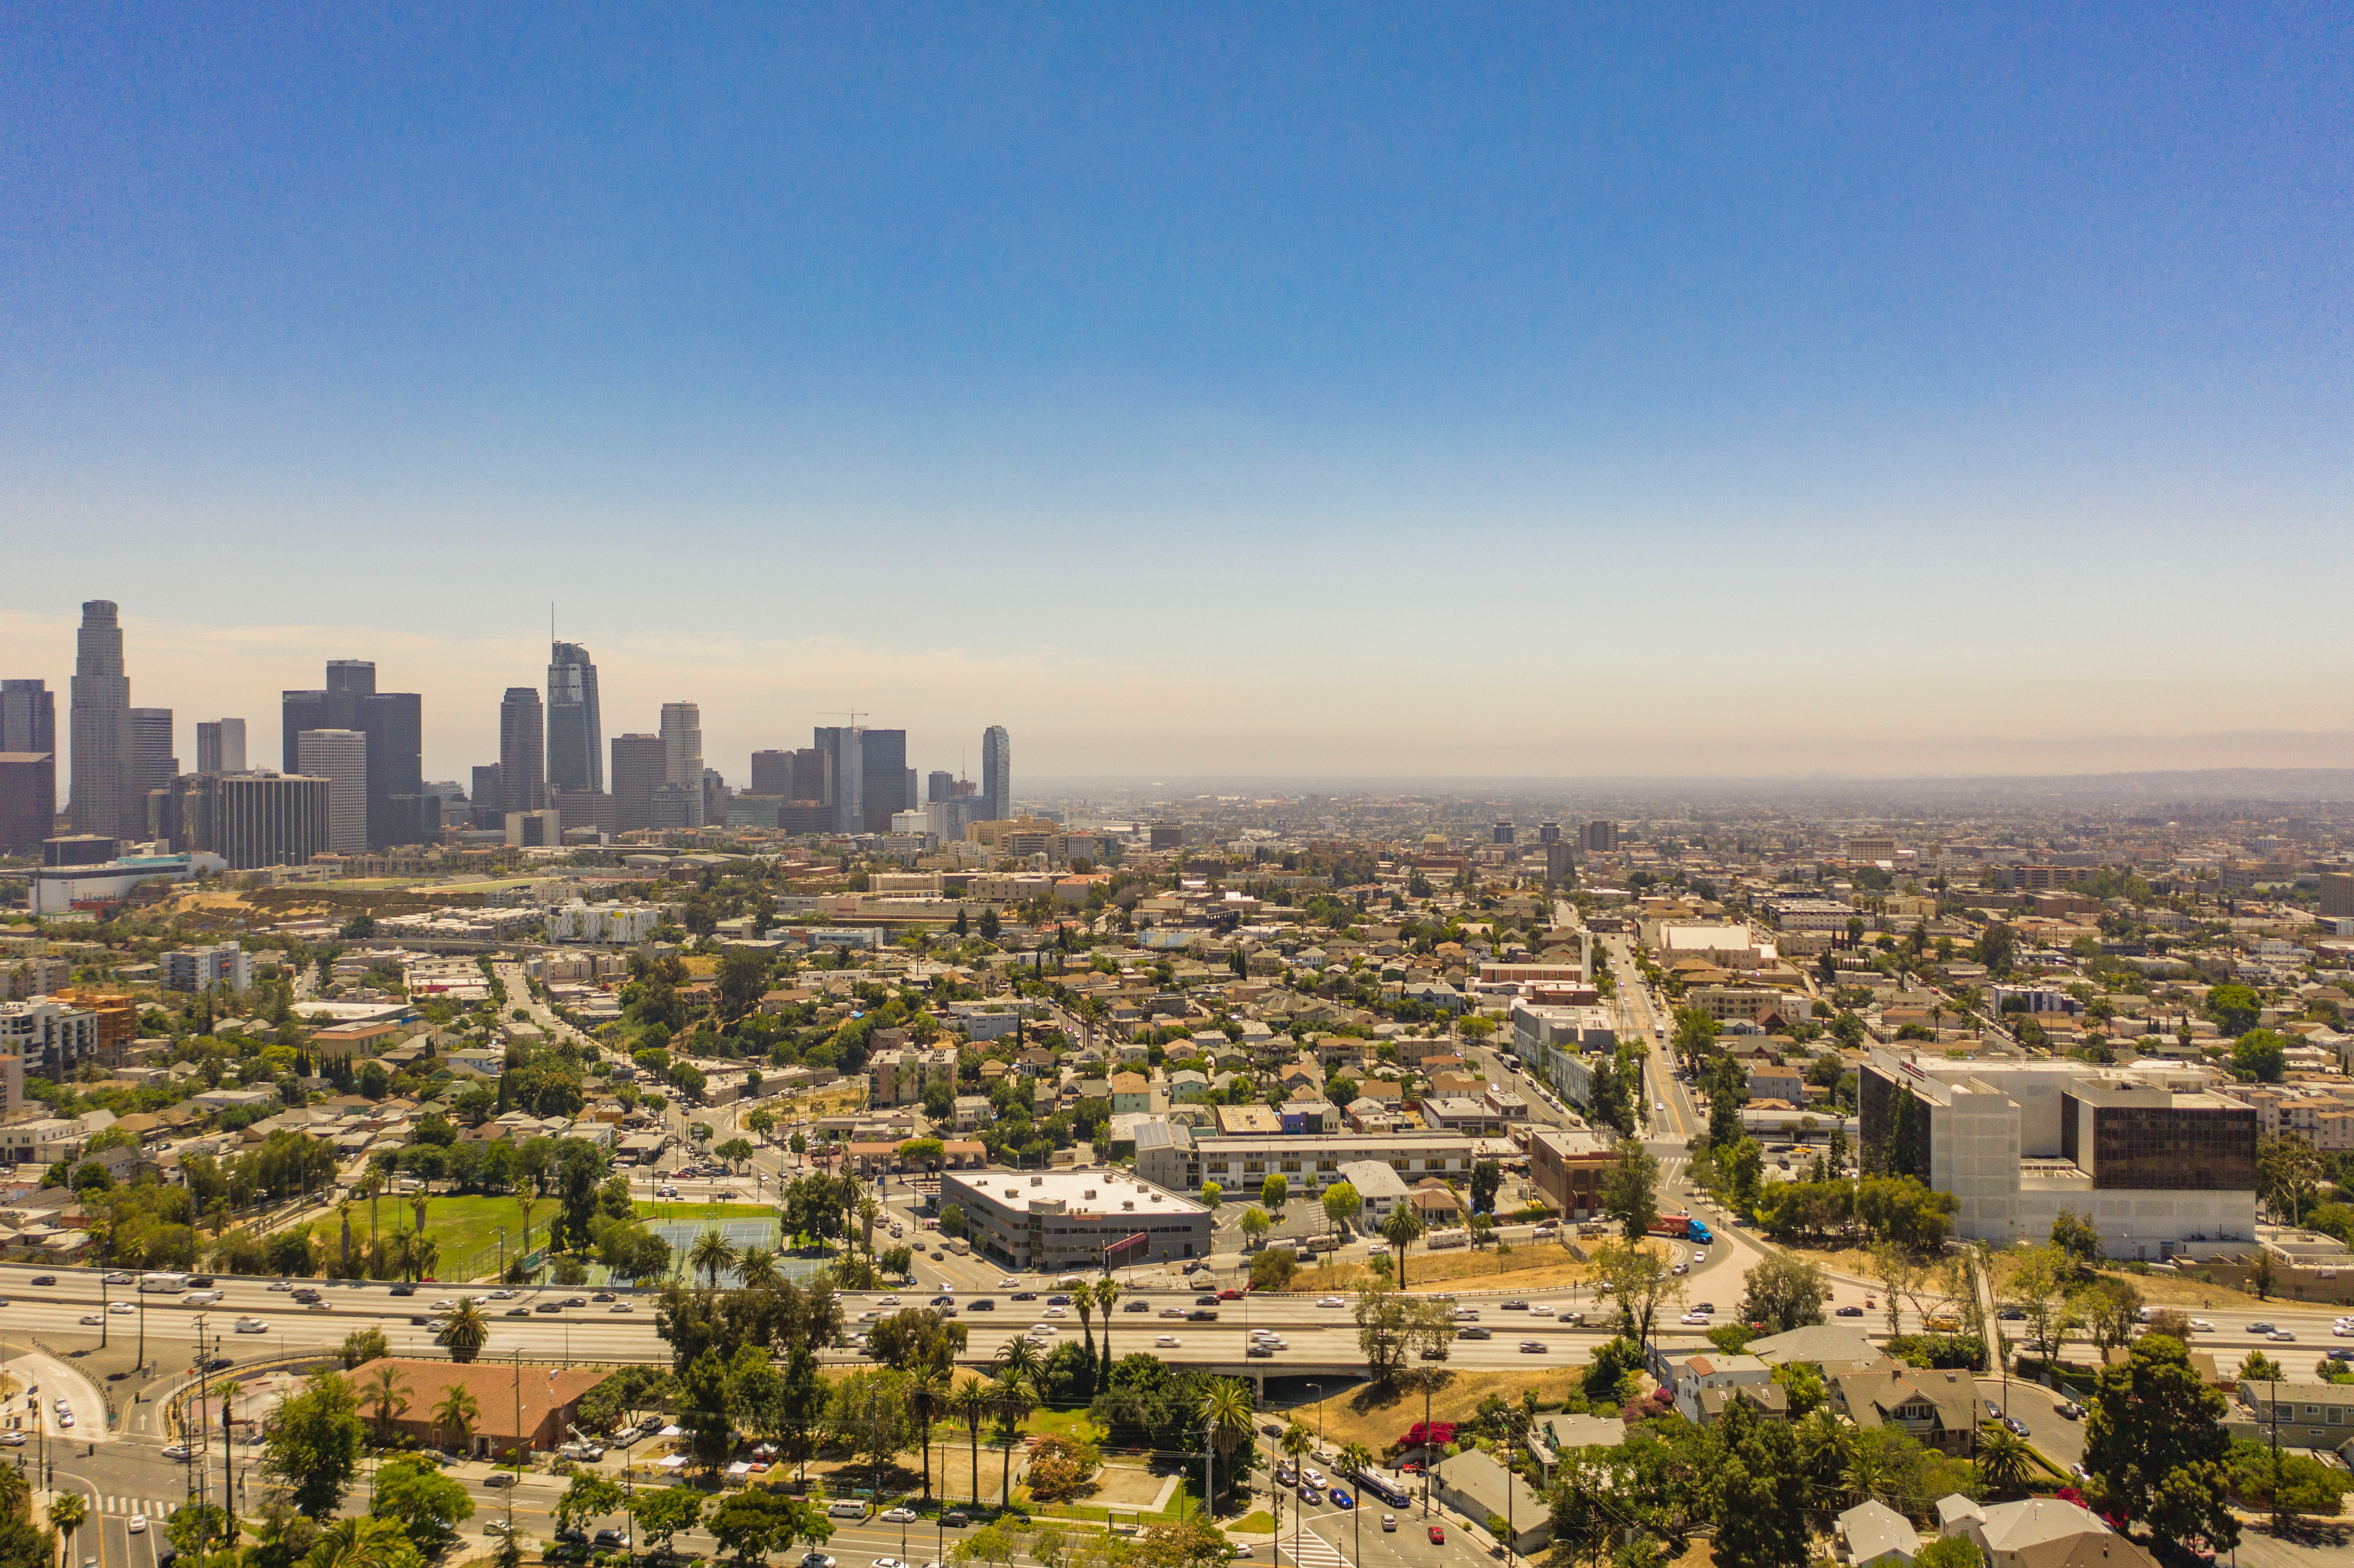 A city skyline of Los Angeles, California